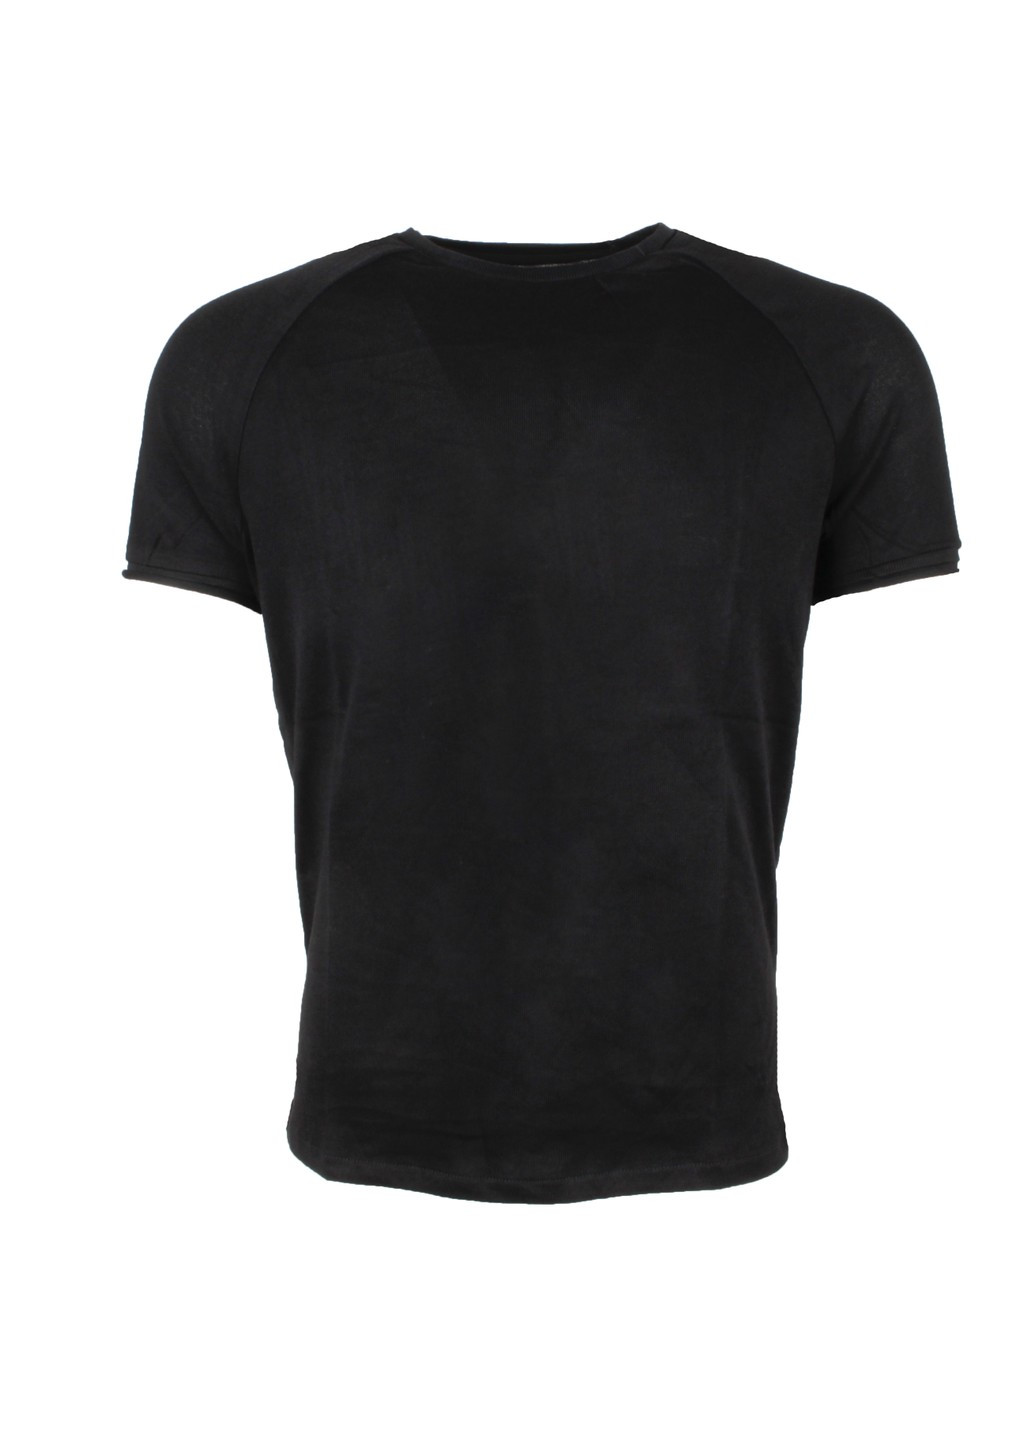 Черная футболка мужская Zara